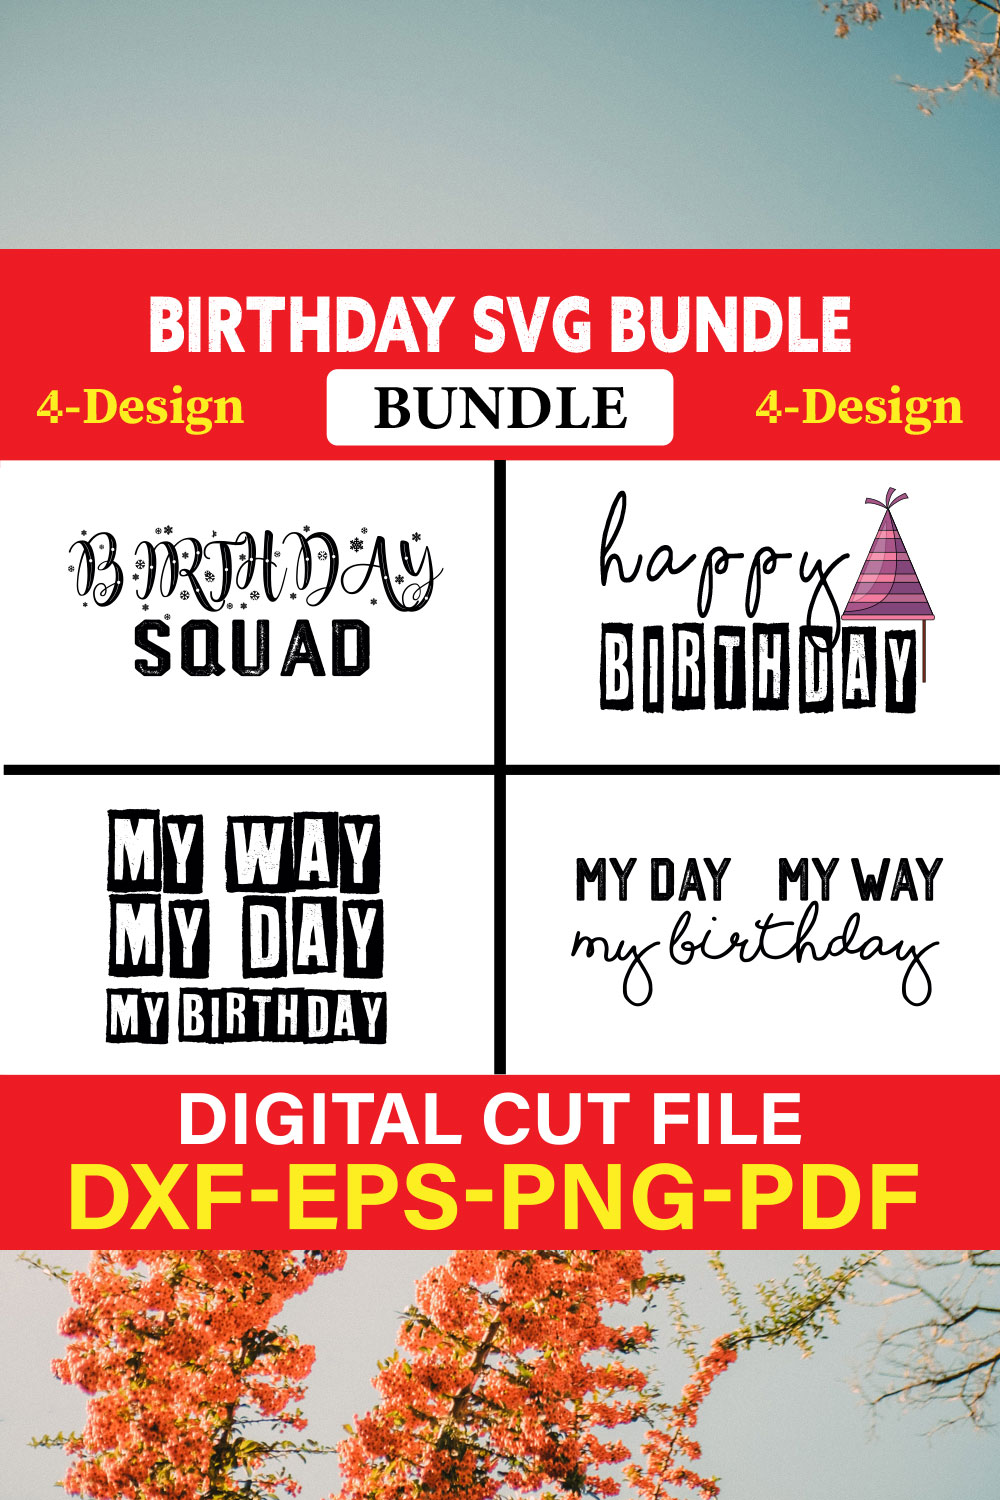 Birthday SVG T-shirt Design Bundle Vol-22 pinterest preview image.